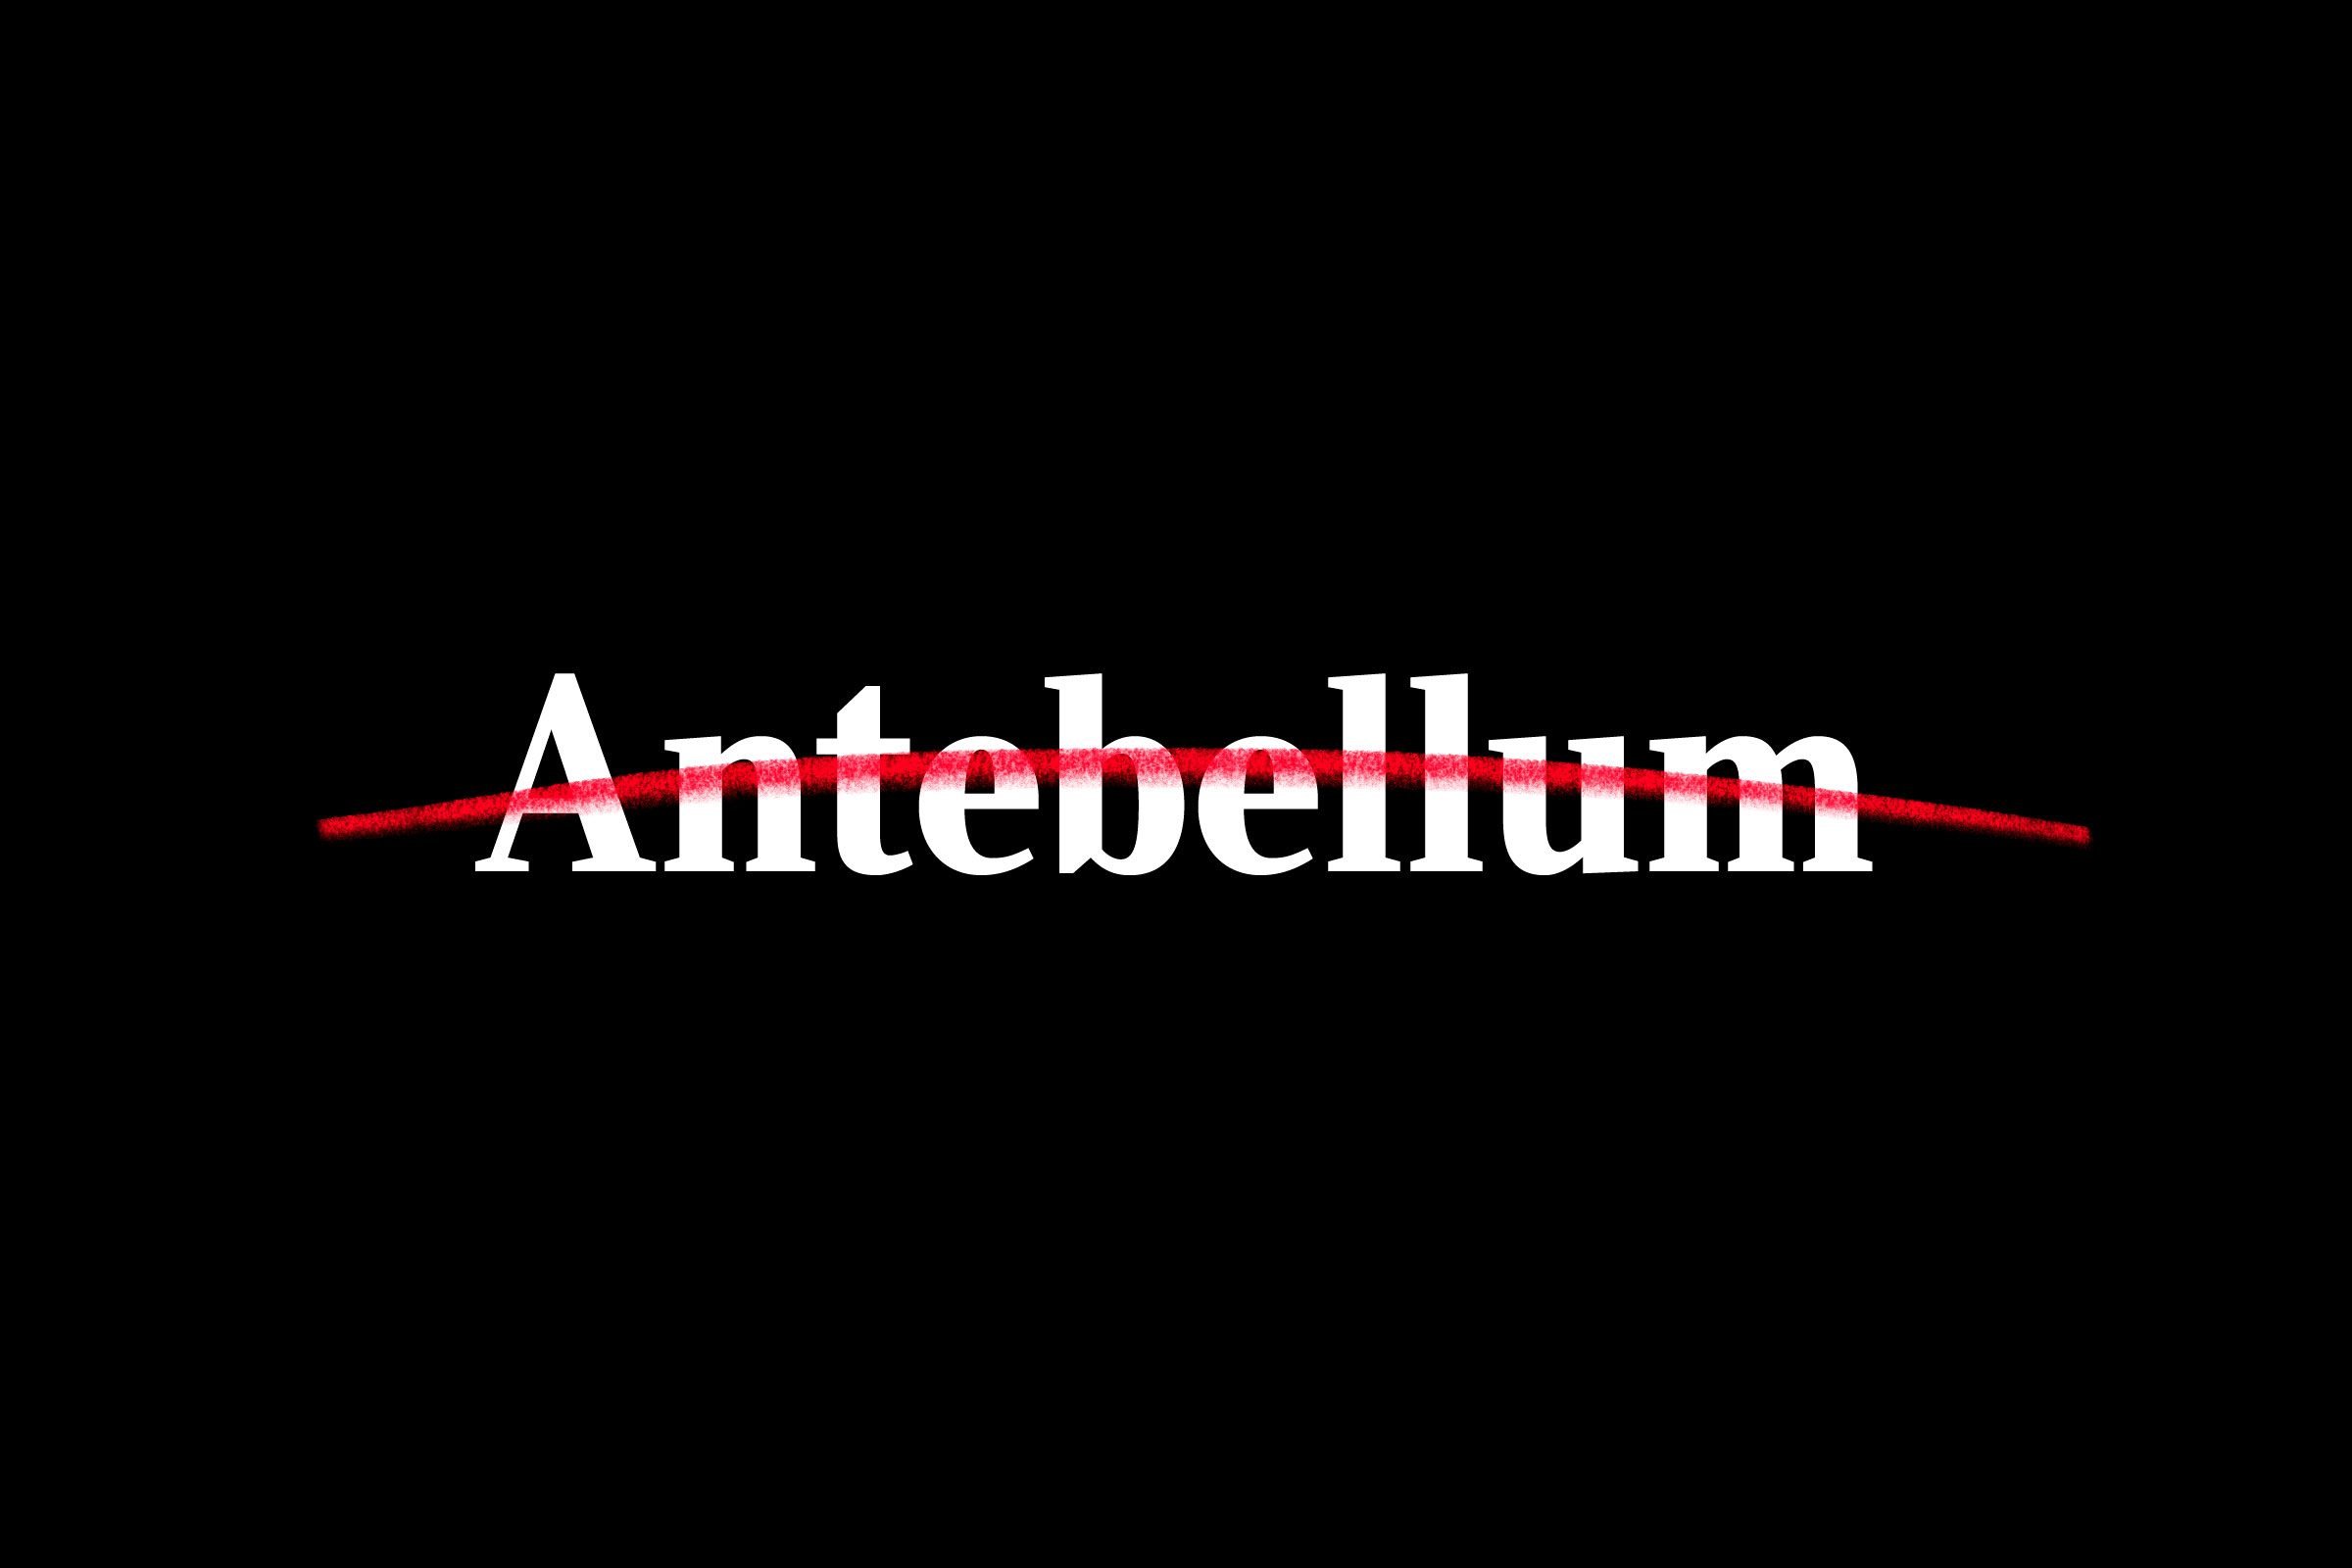 "antebellum" crossed out